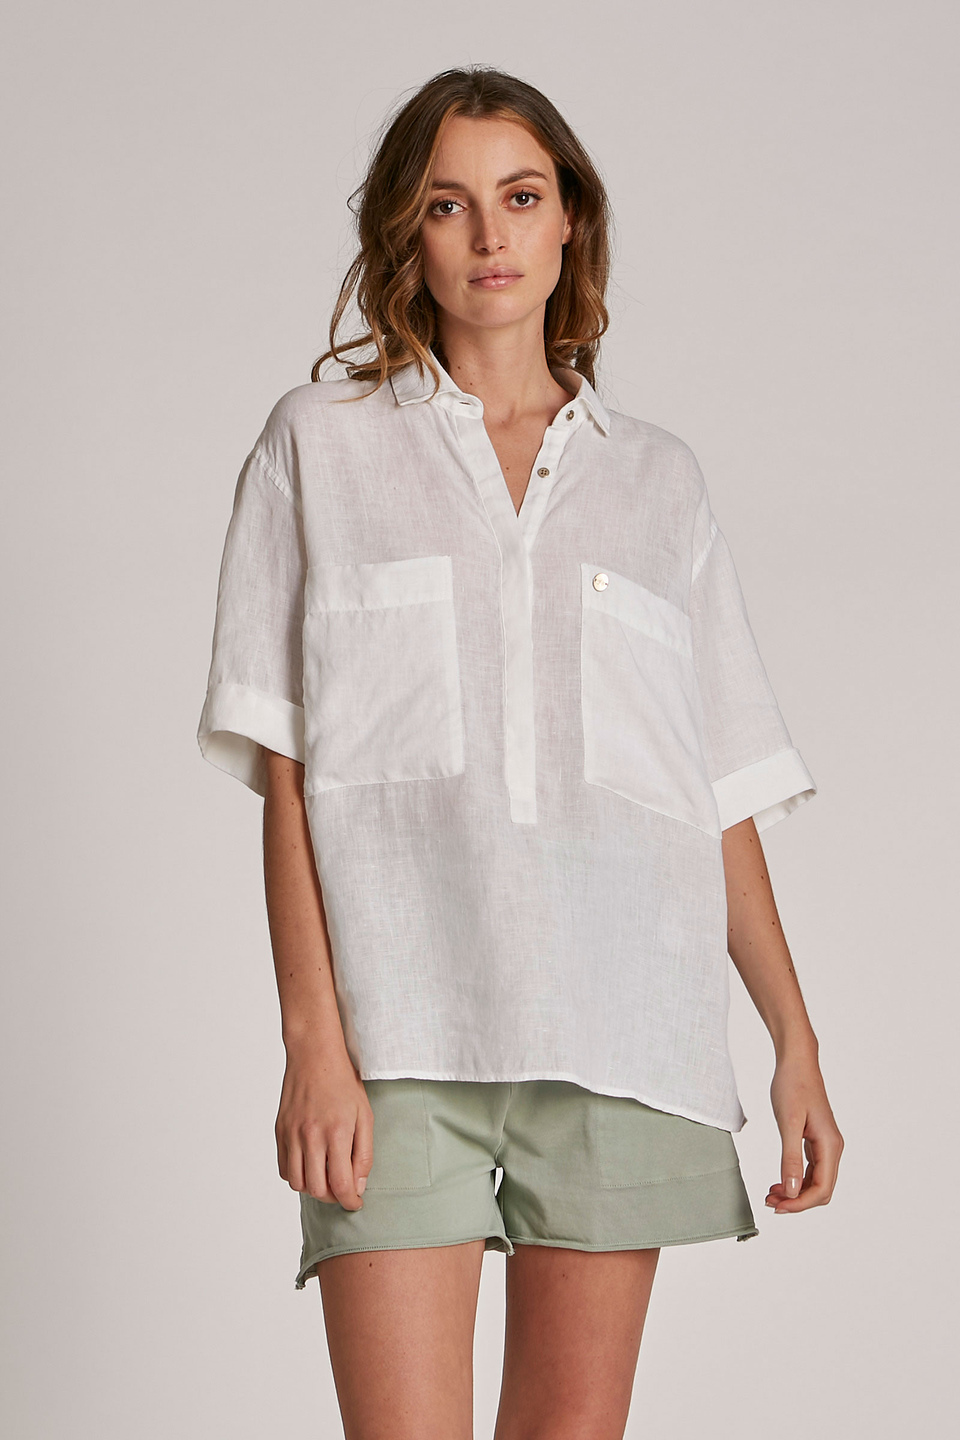 Women's plain-coloured regular-fit shirt in 100% linen fabric | La Martina - Official Online Shop